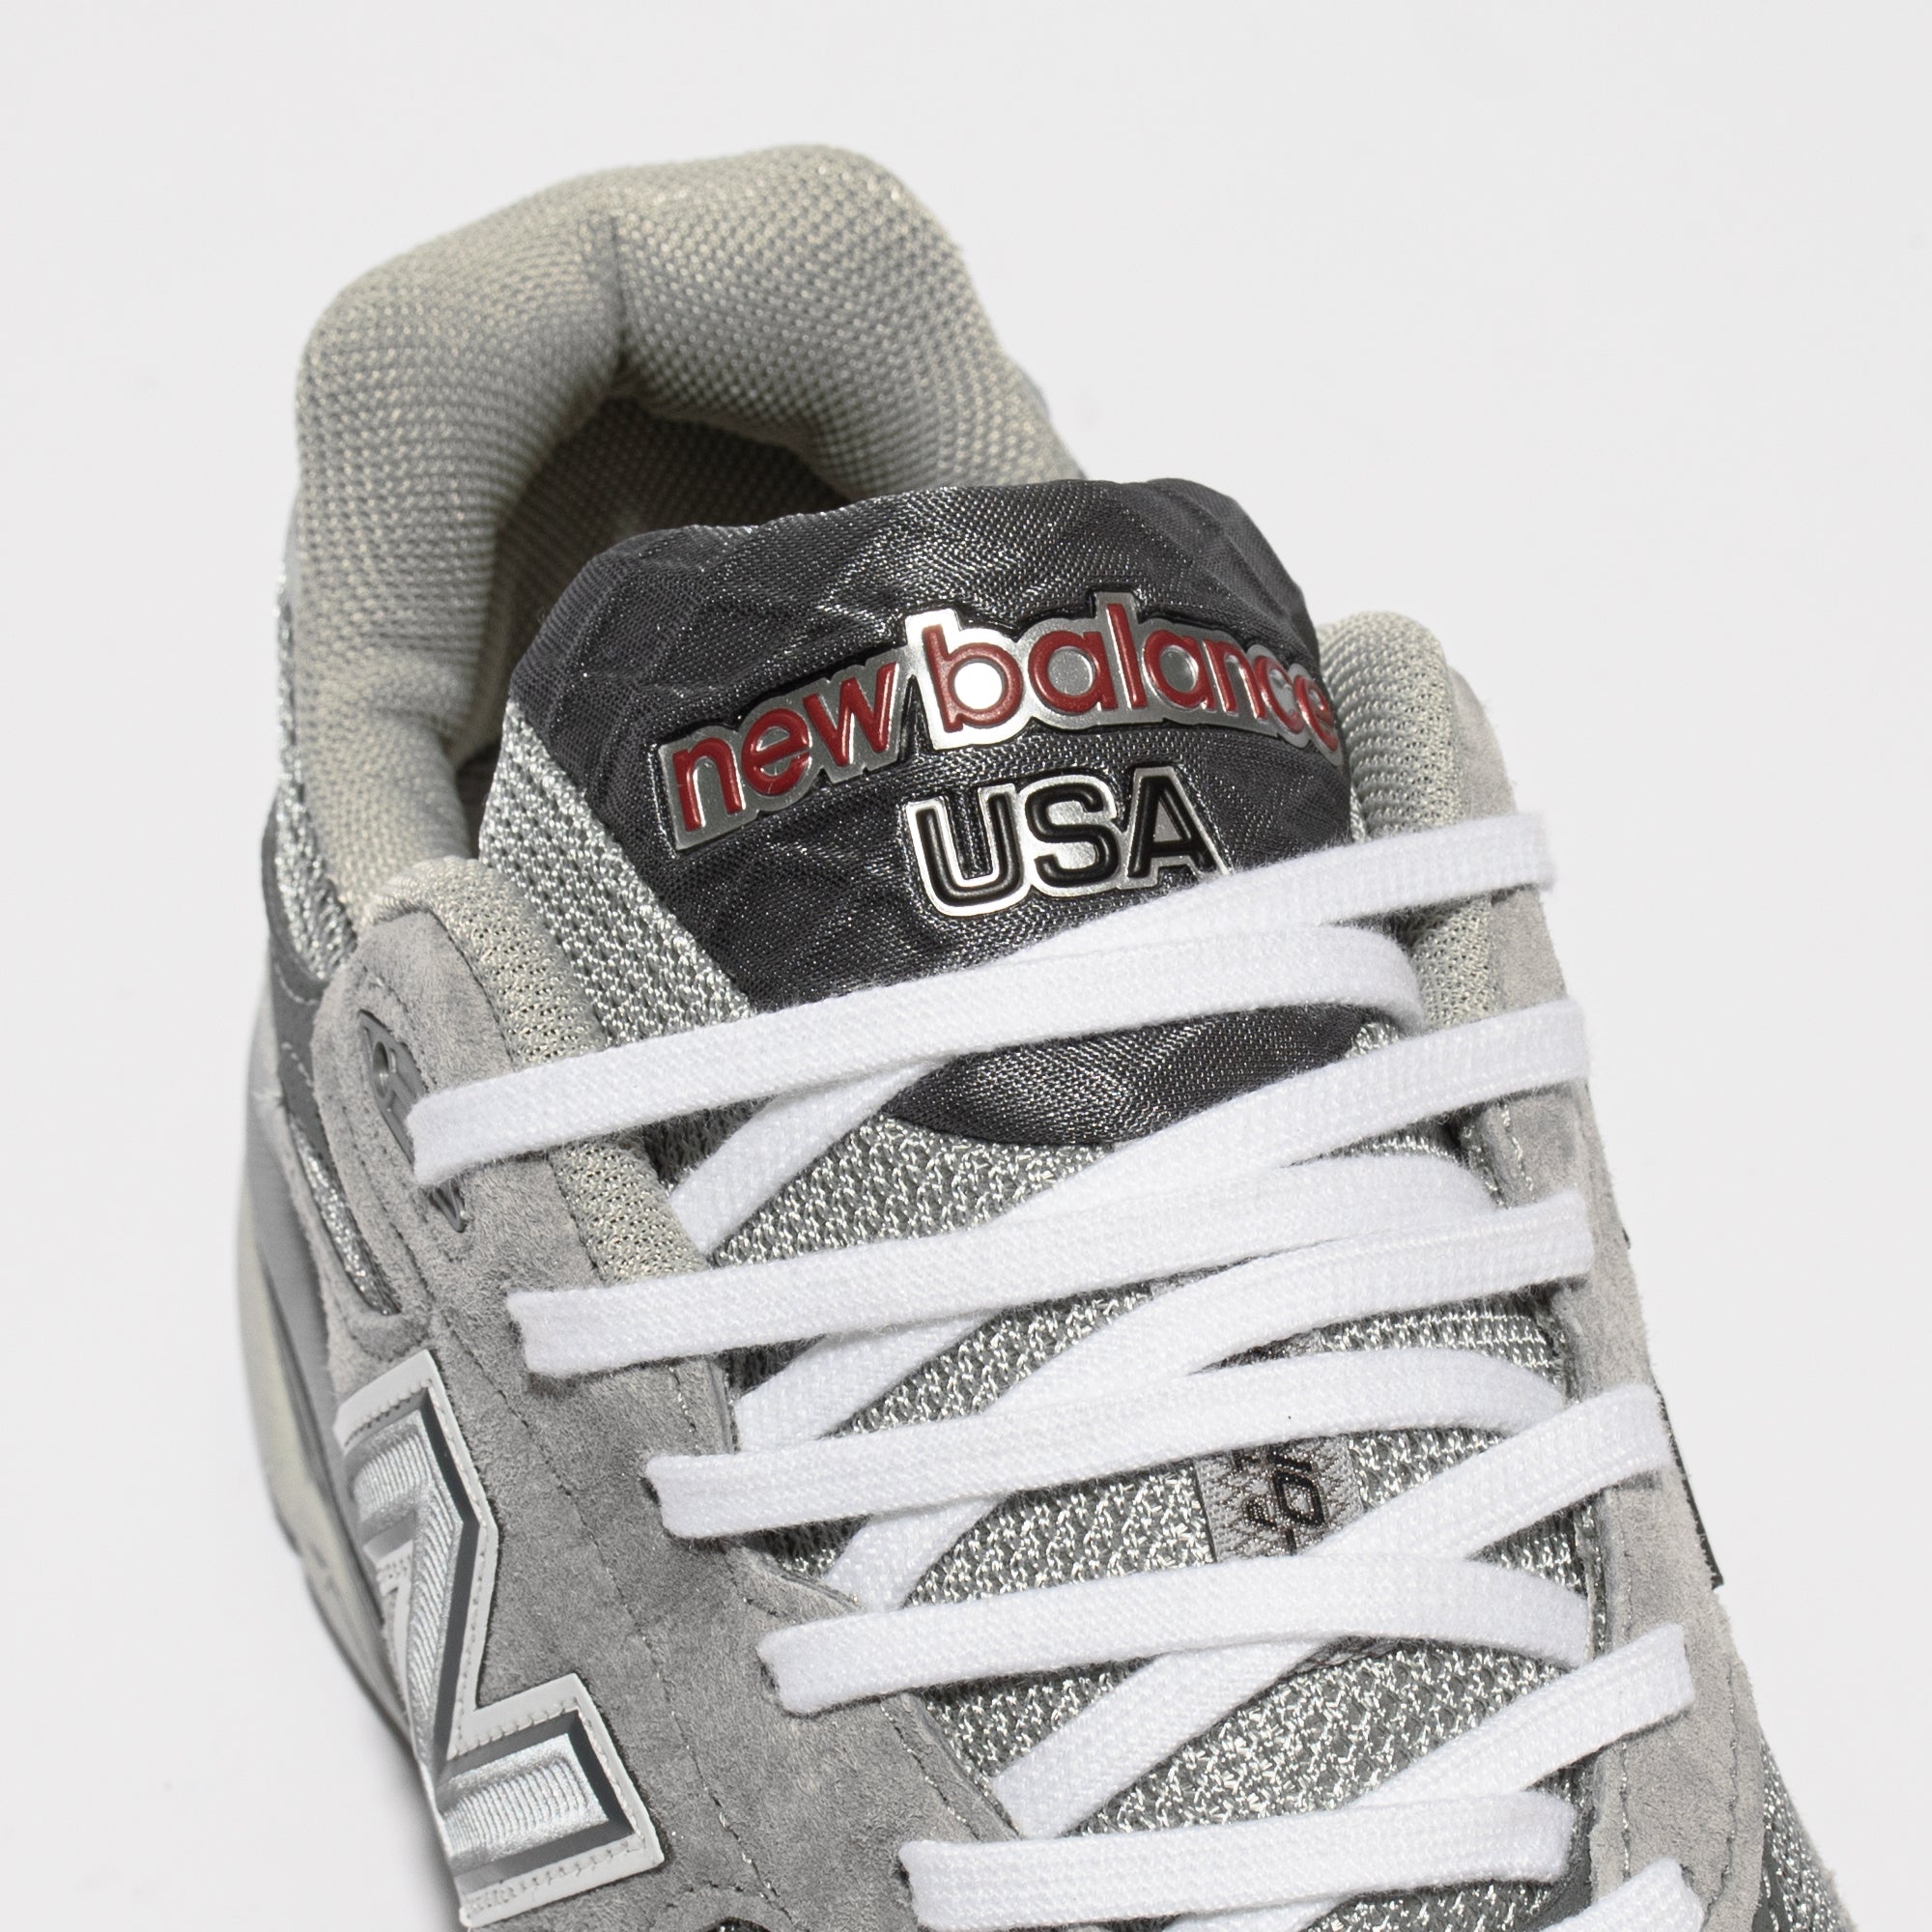 New Balance Mens Made US 990v3 Shoes 'Grey'